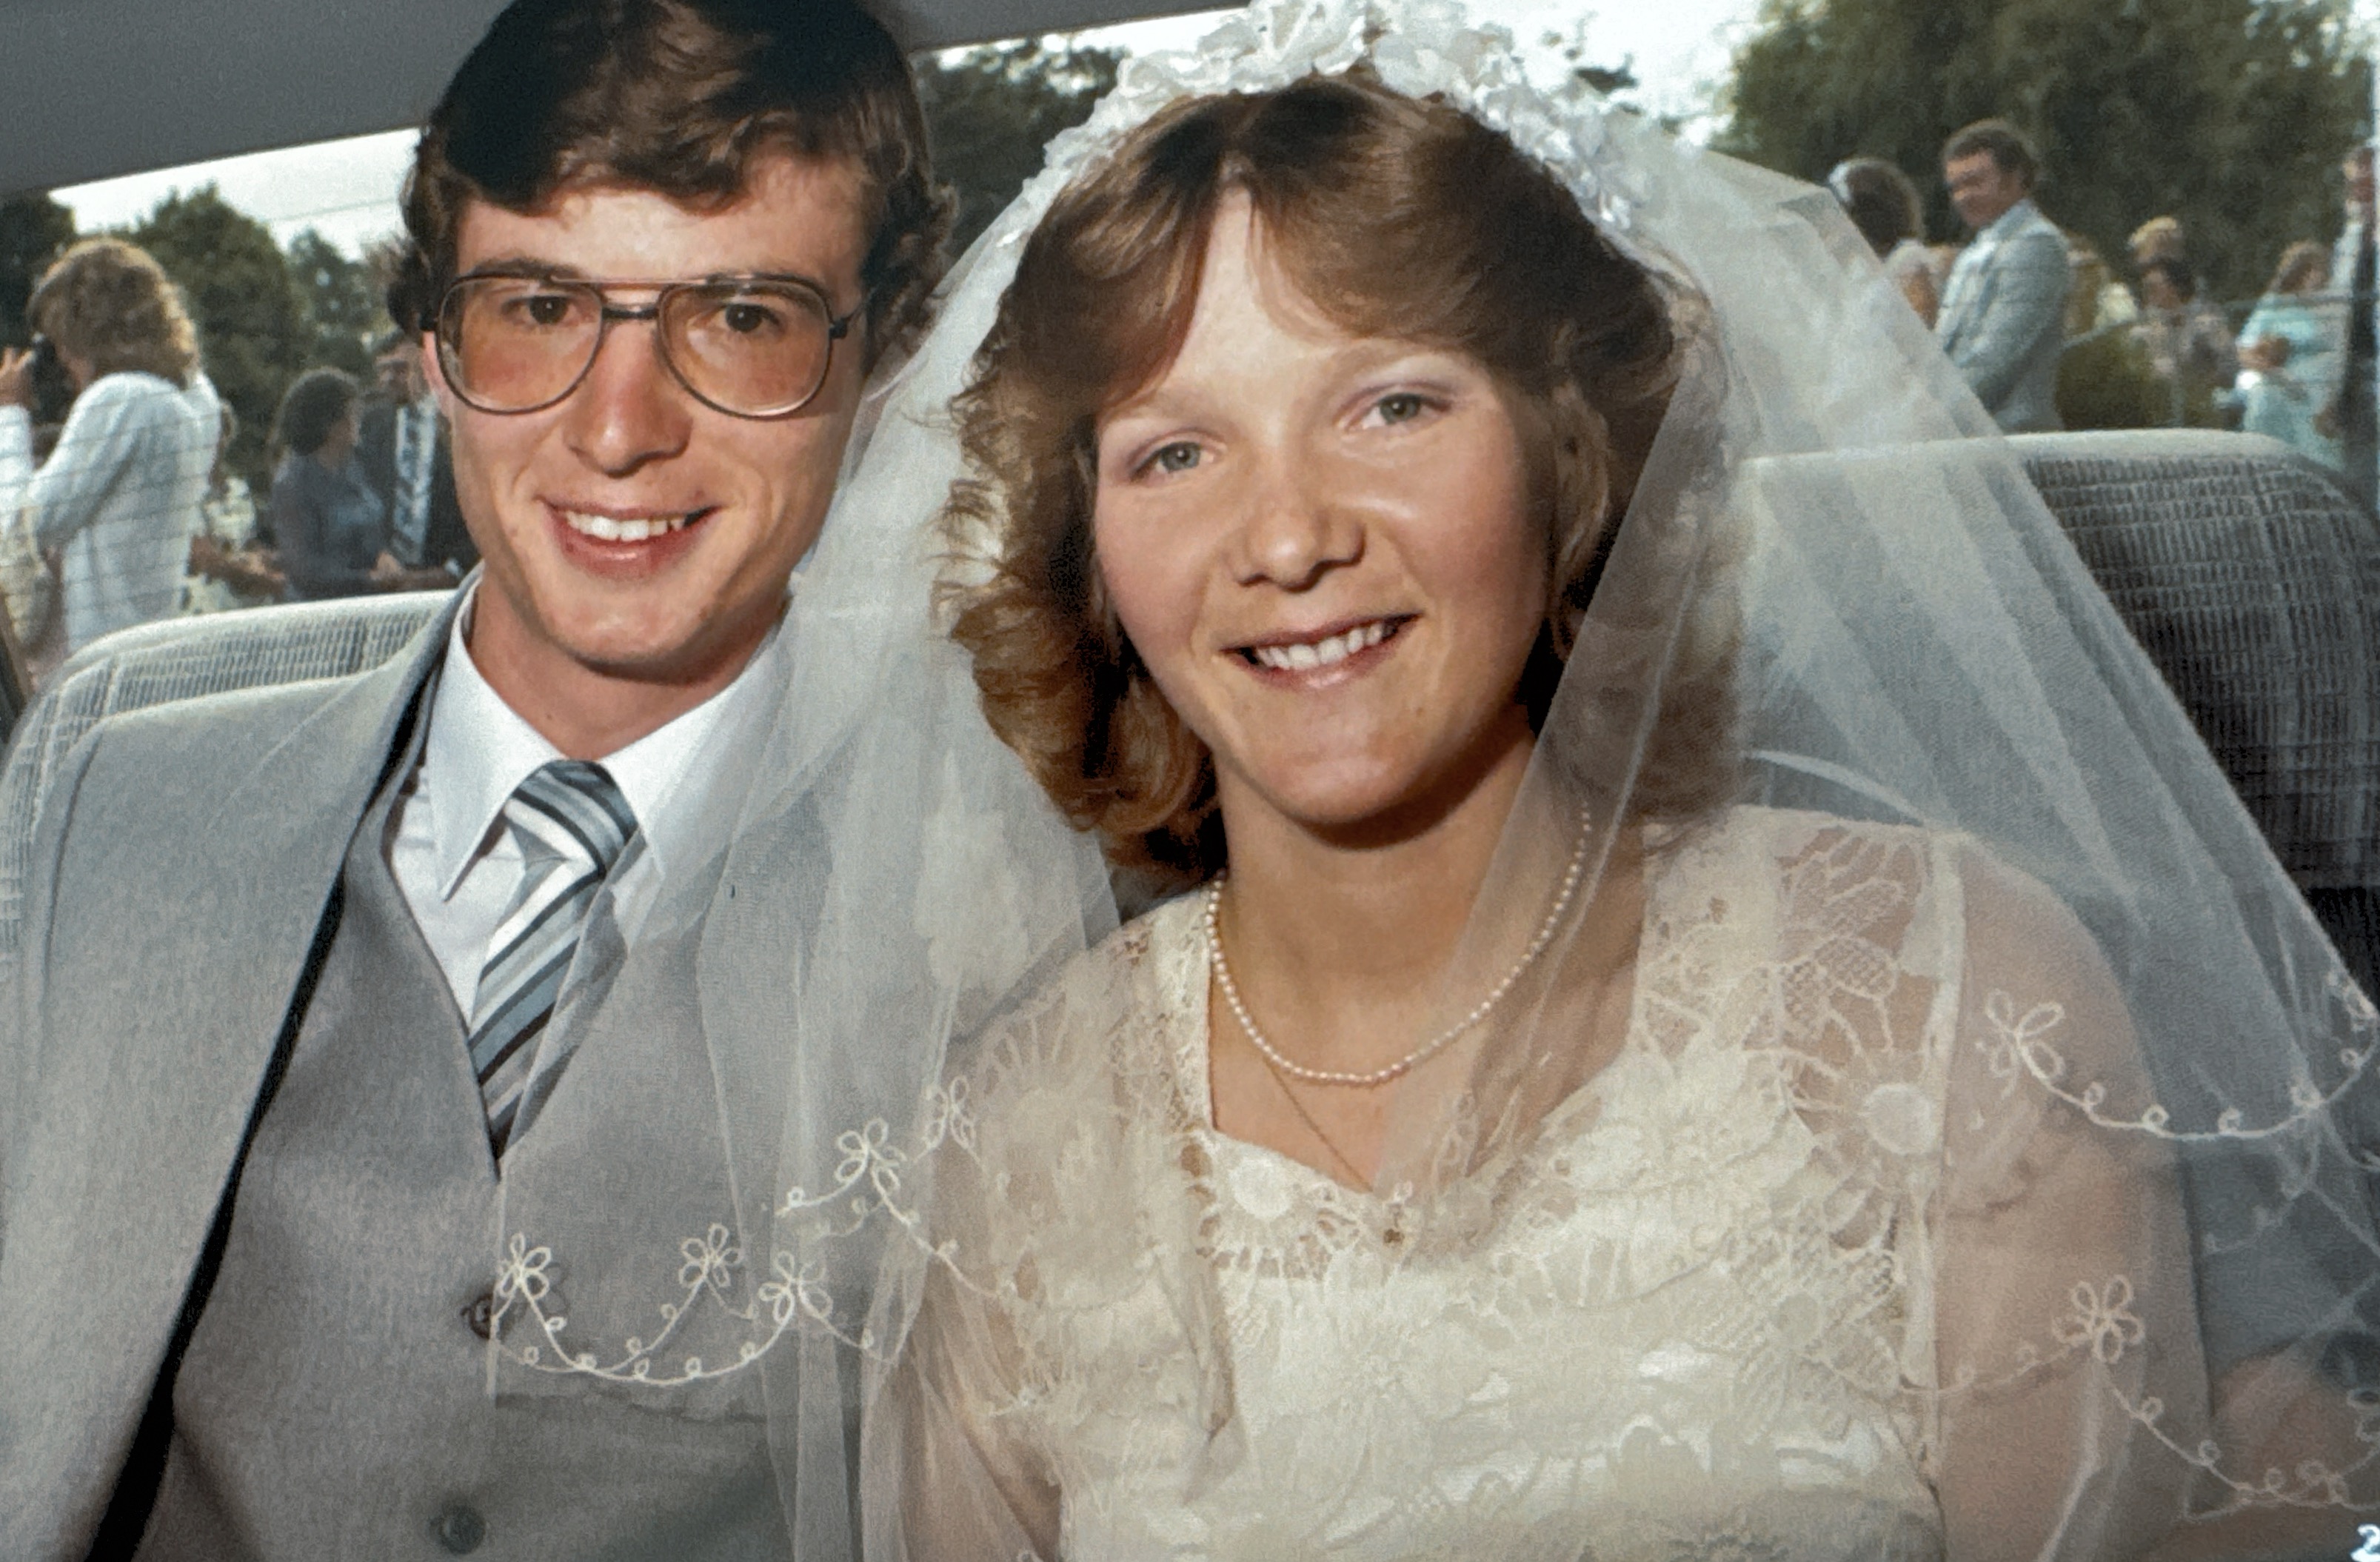 Wedding Day 7 th January 1984